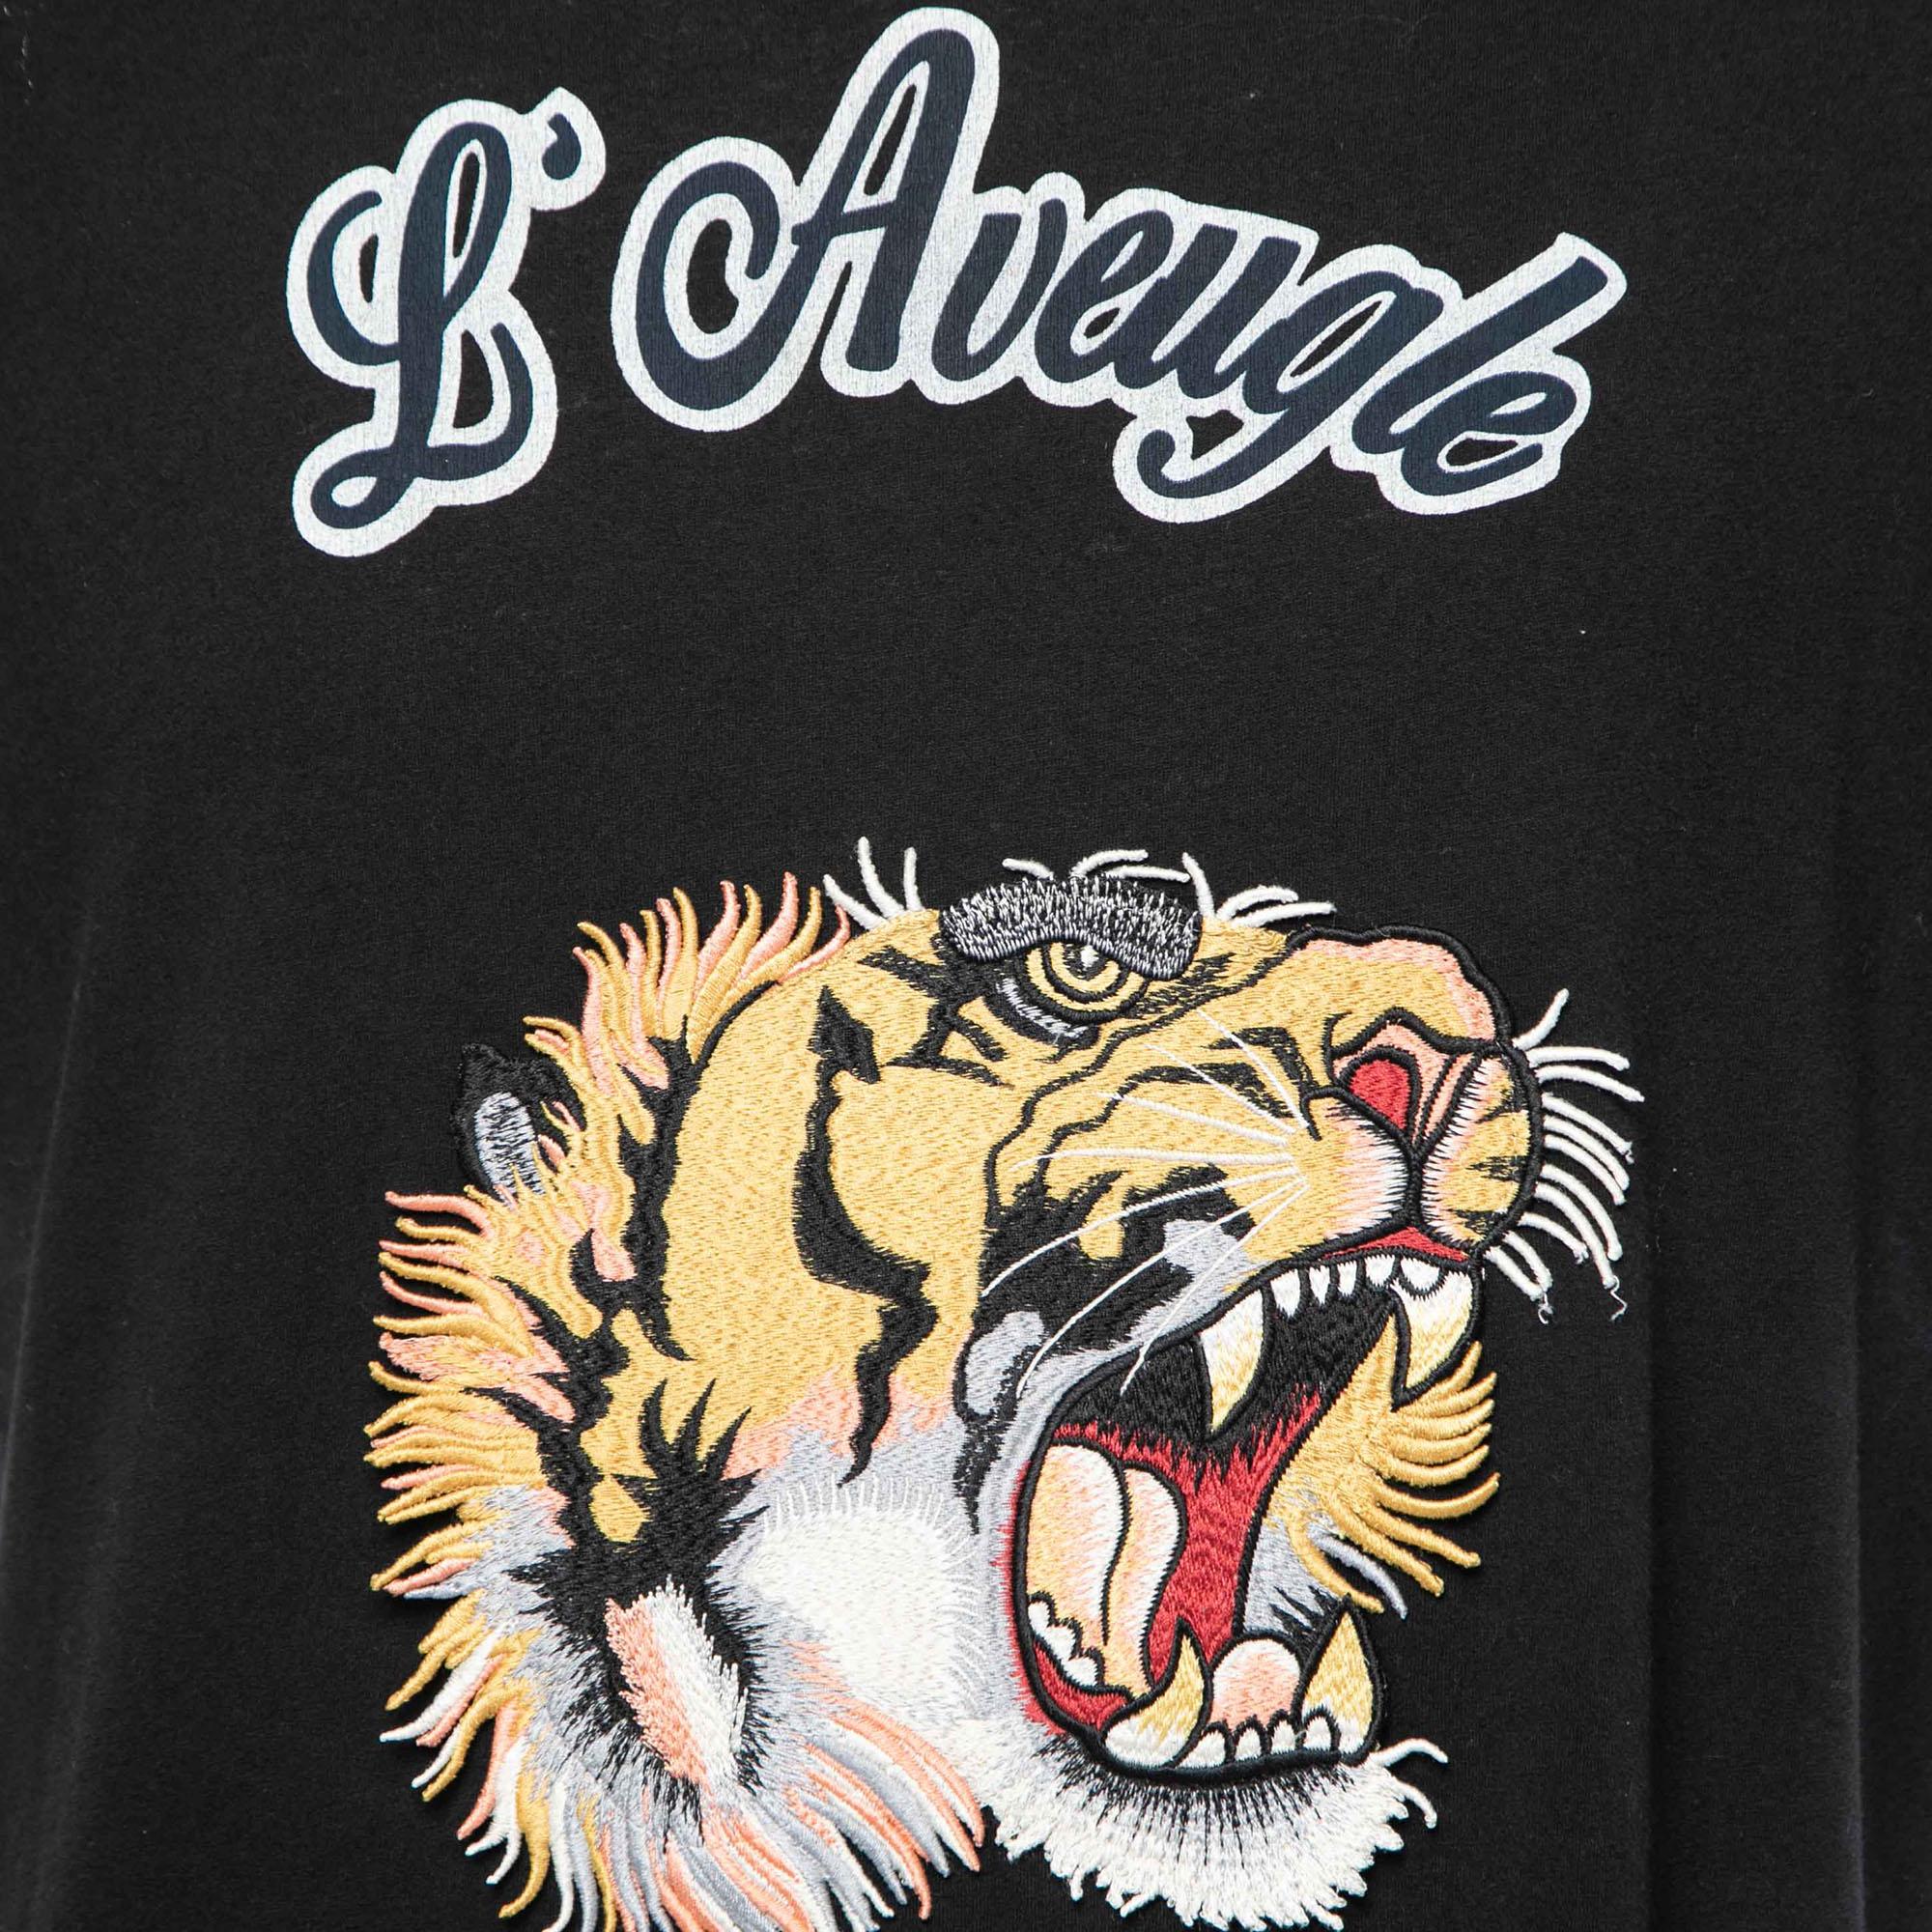 tiger gucci shirt